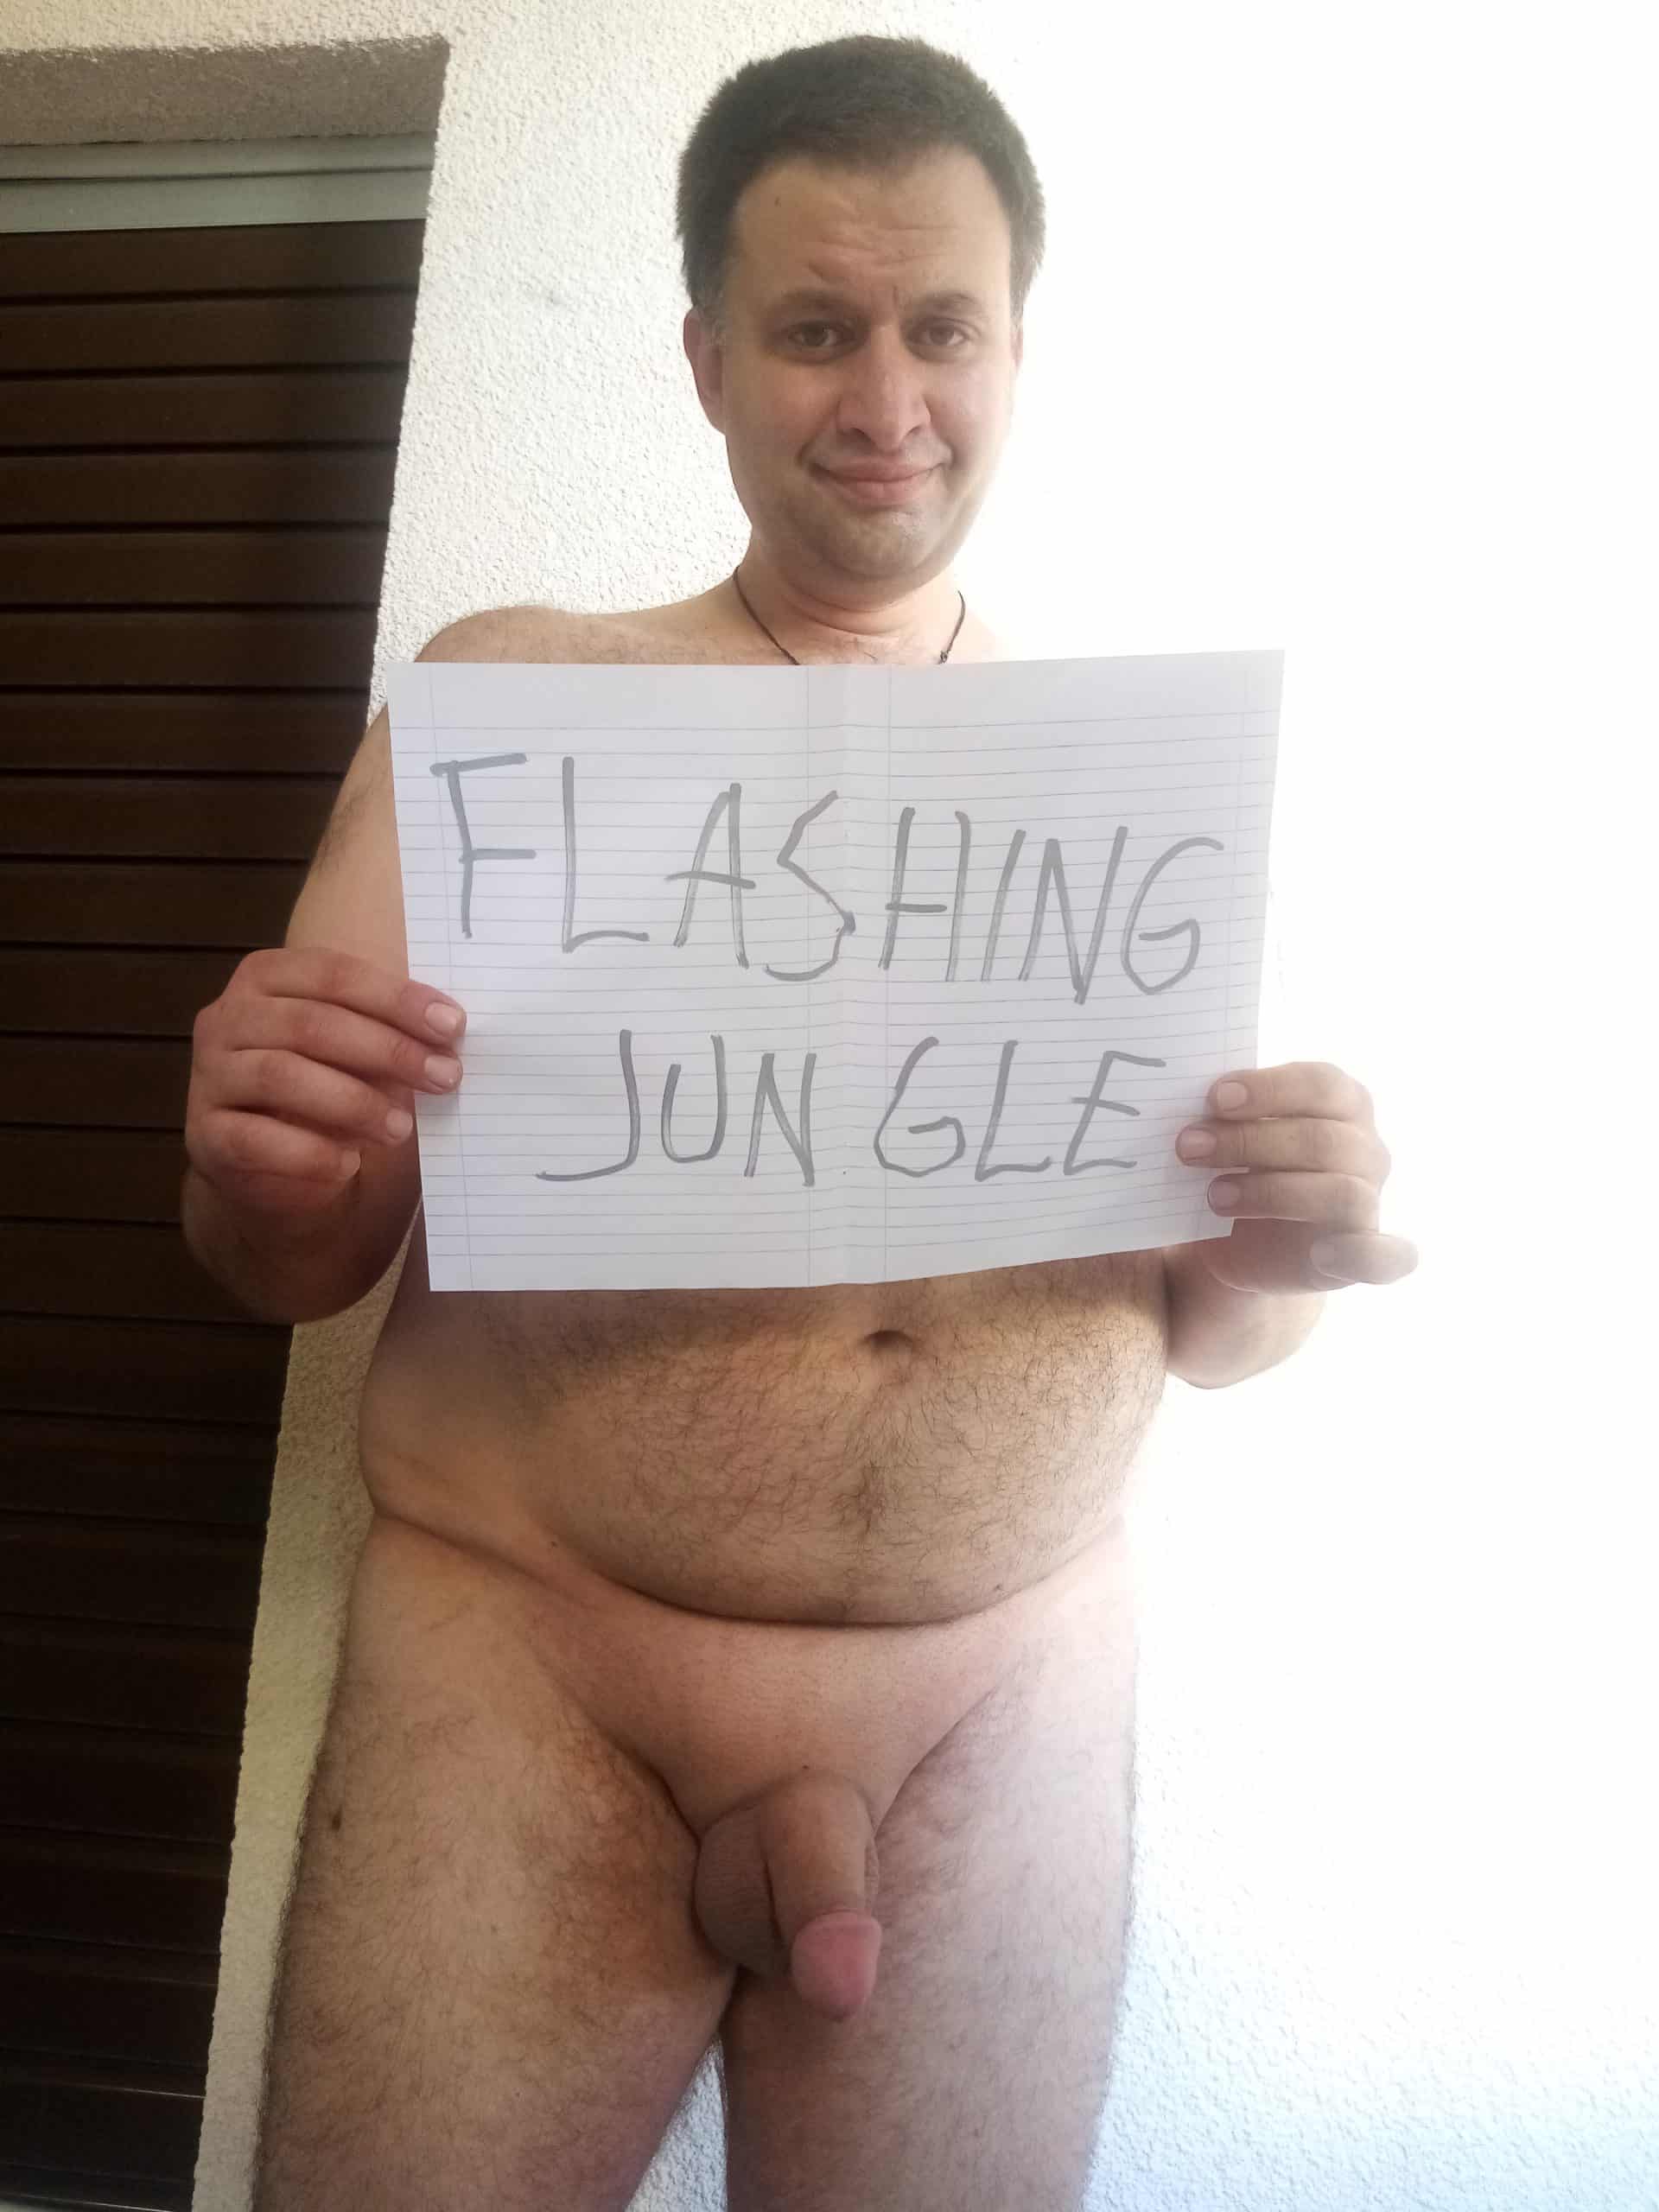 chinese voyeur nudism amateur forum - Born naked Nudism - Dick Flash Pics